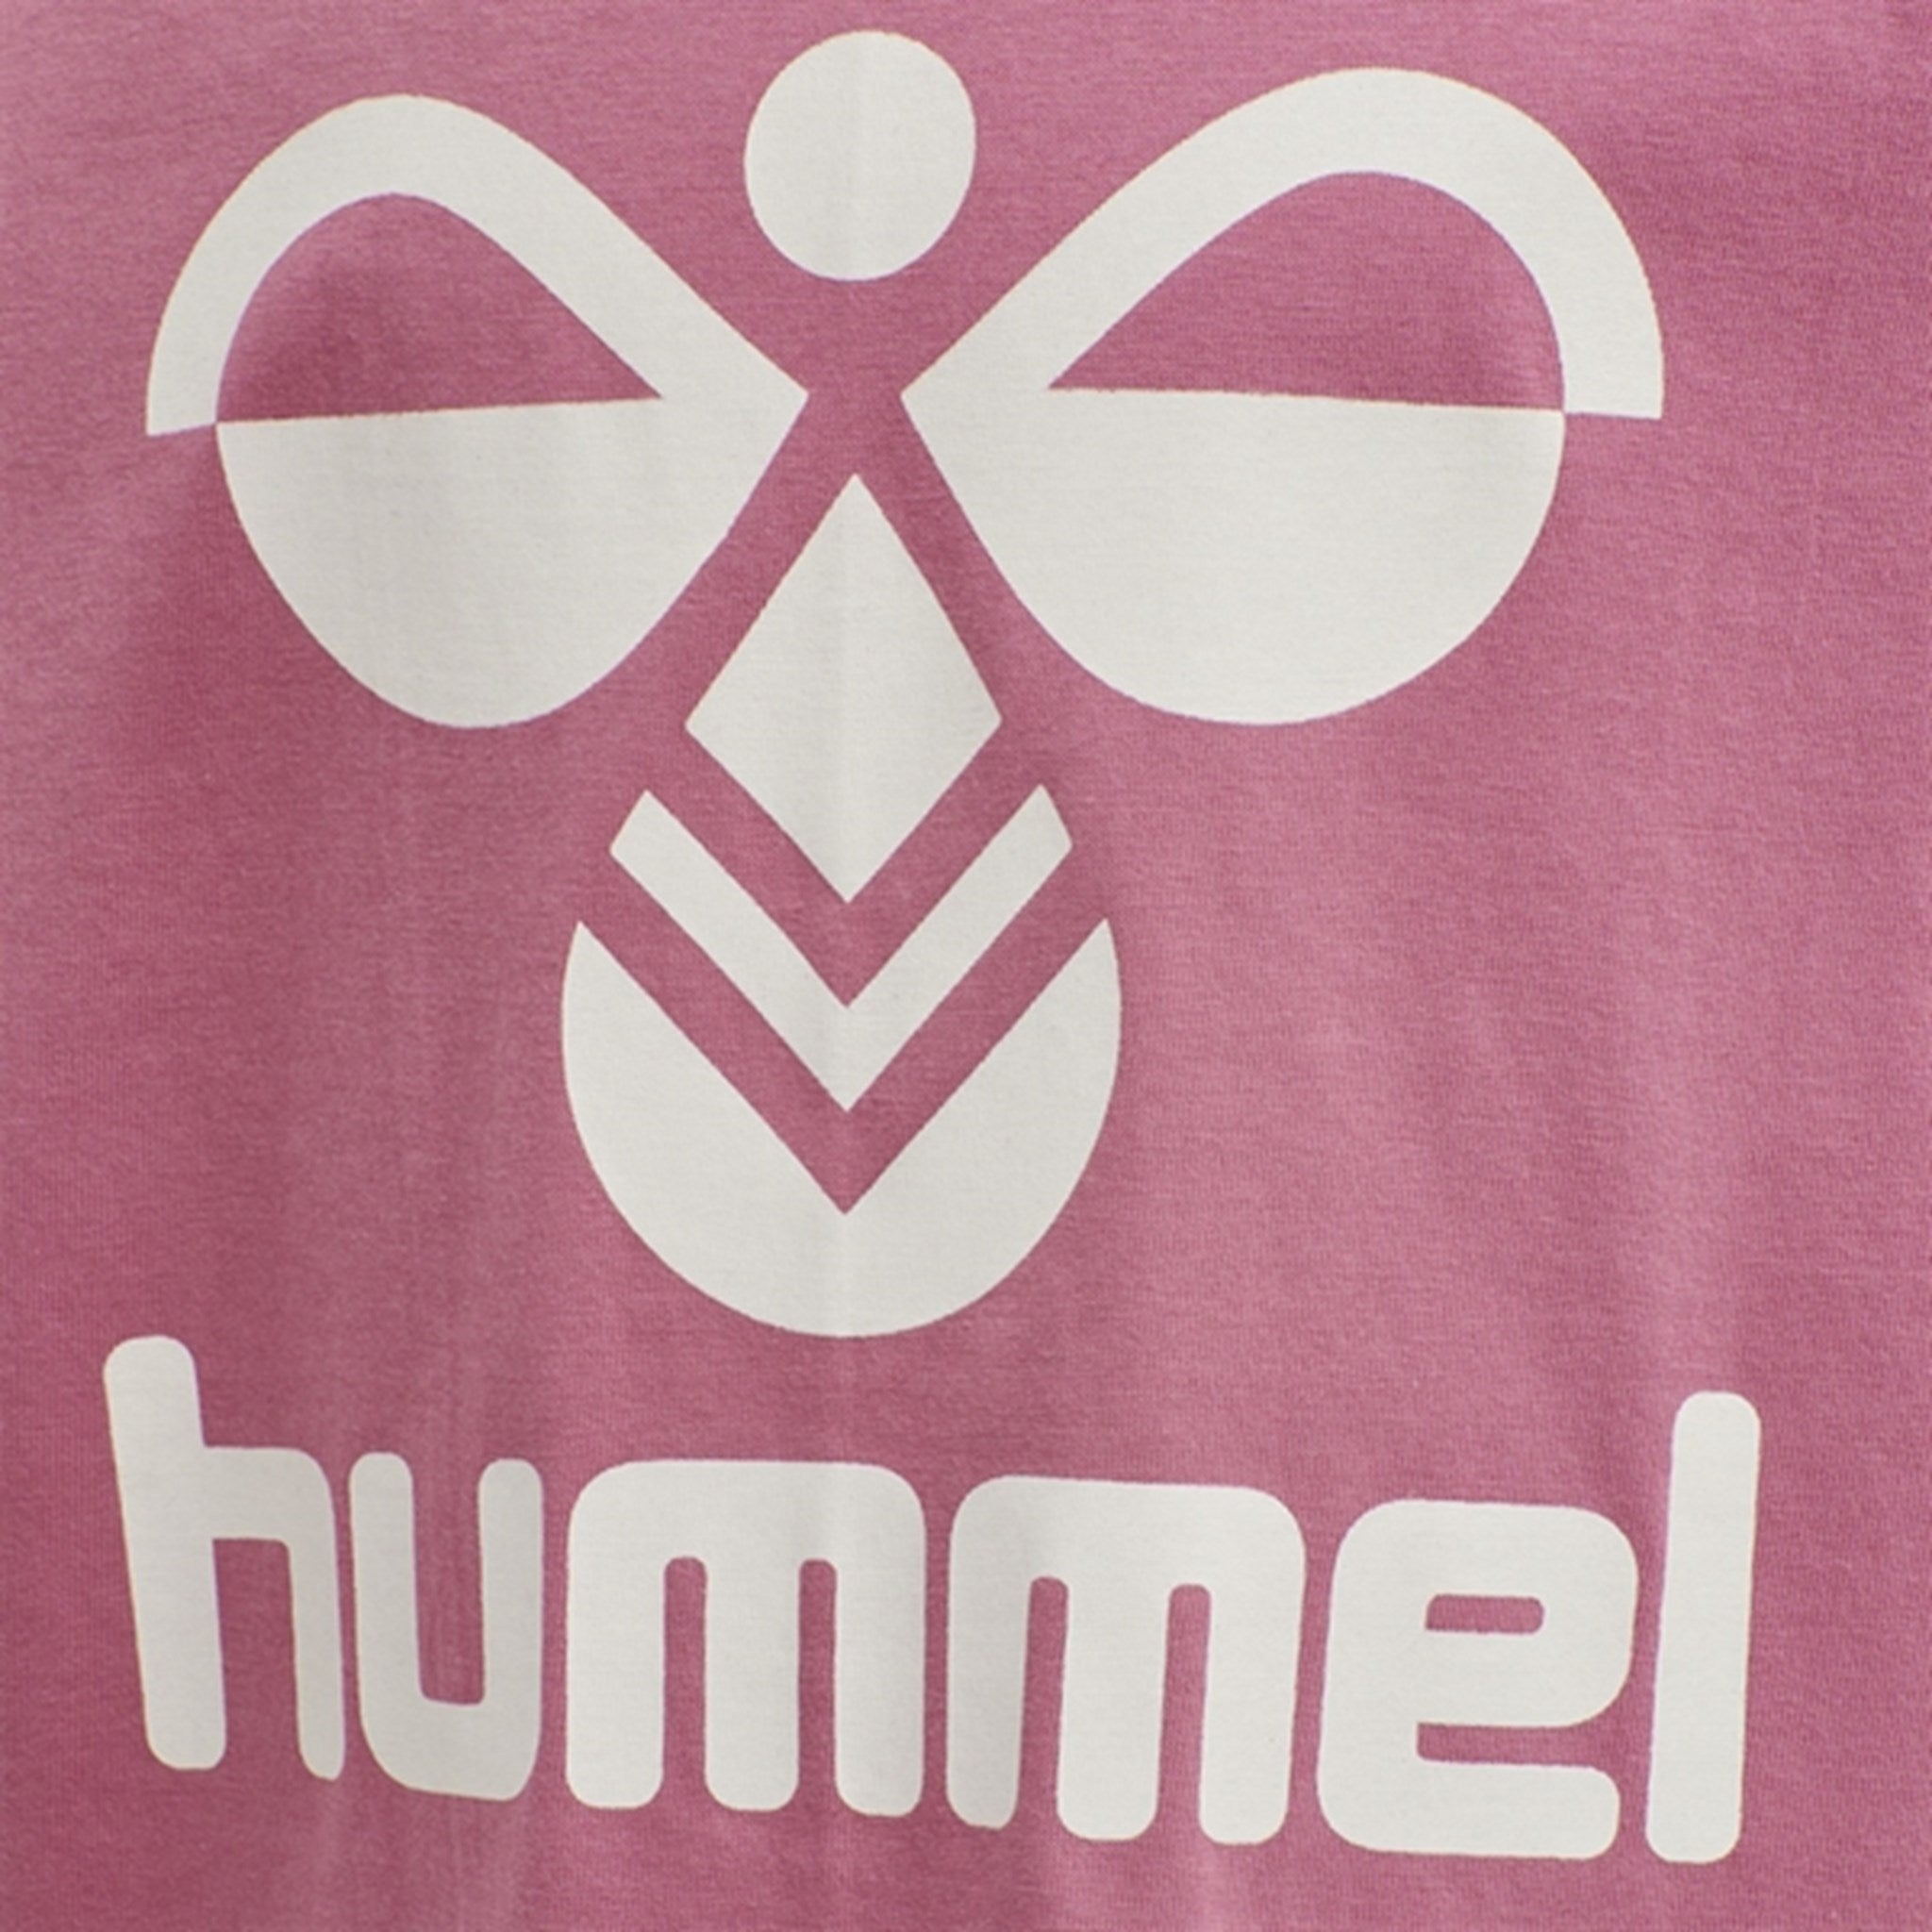 Hummel Heather Rose Tres T-Shirt S/S 2